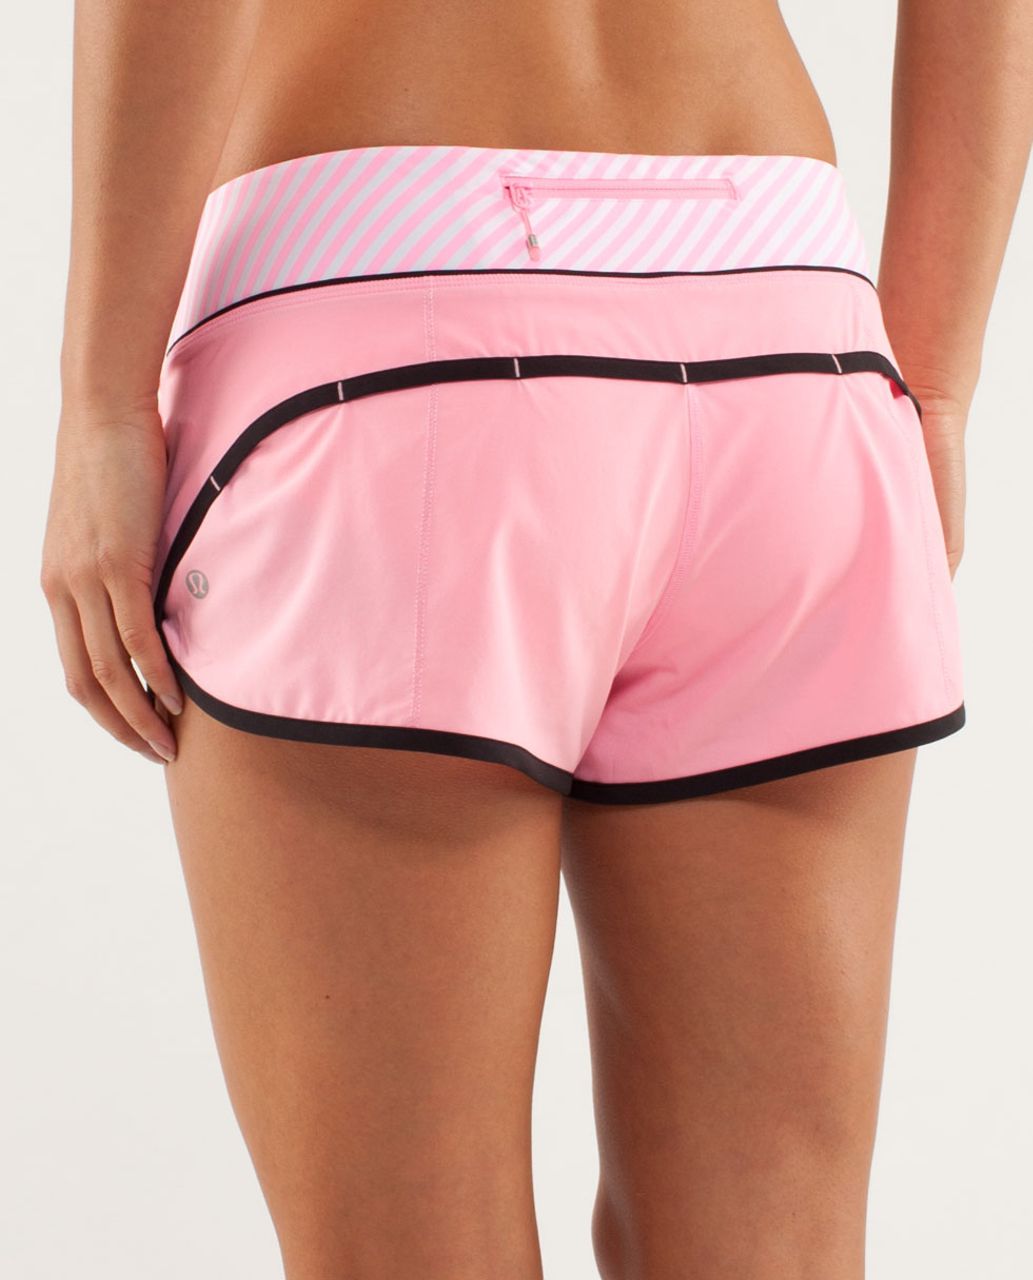 BOMBSHELL Sportswear Pink Stripe Running Shorts S 